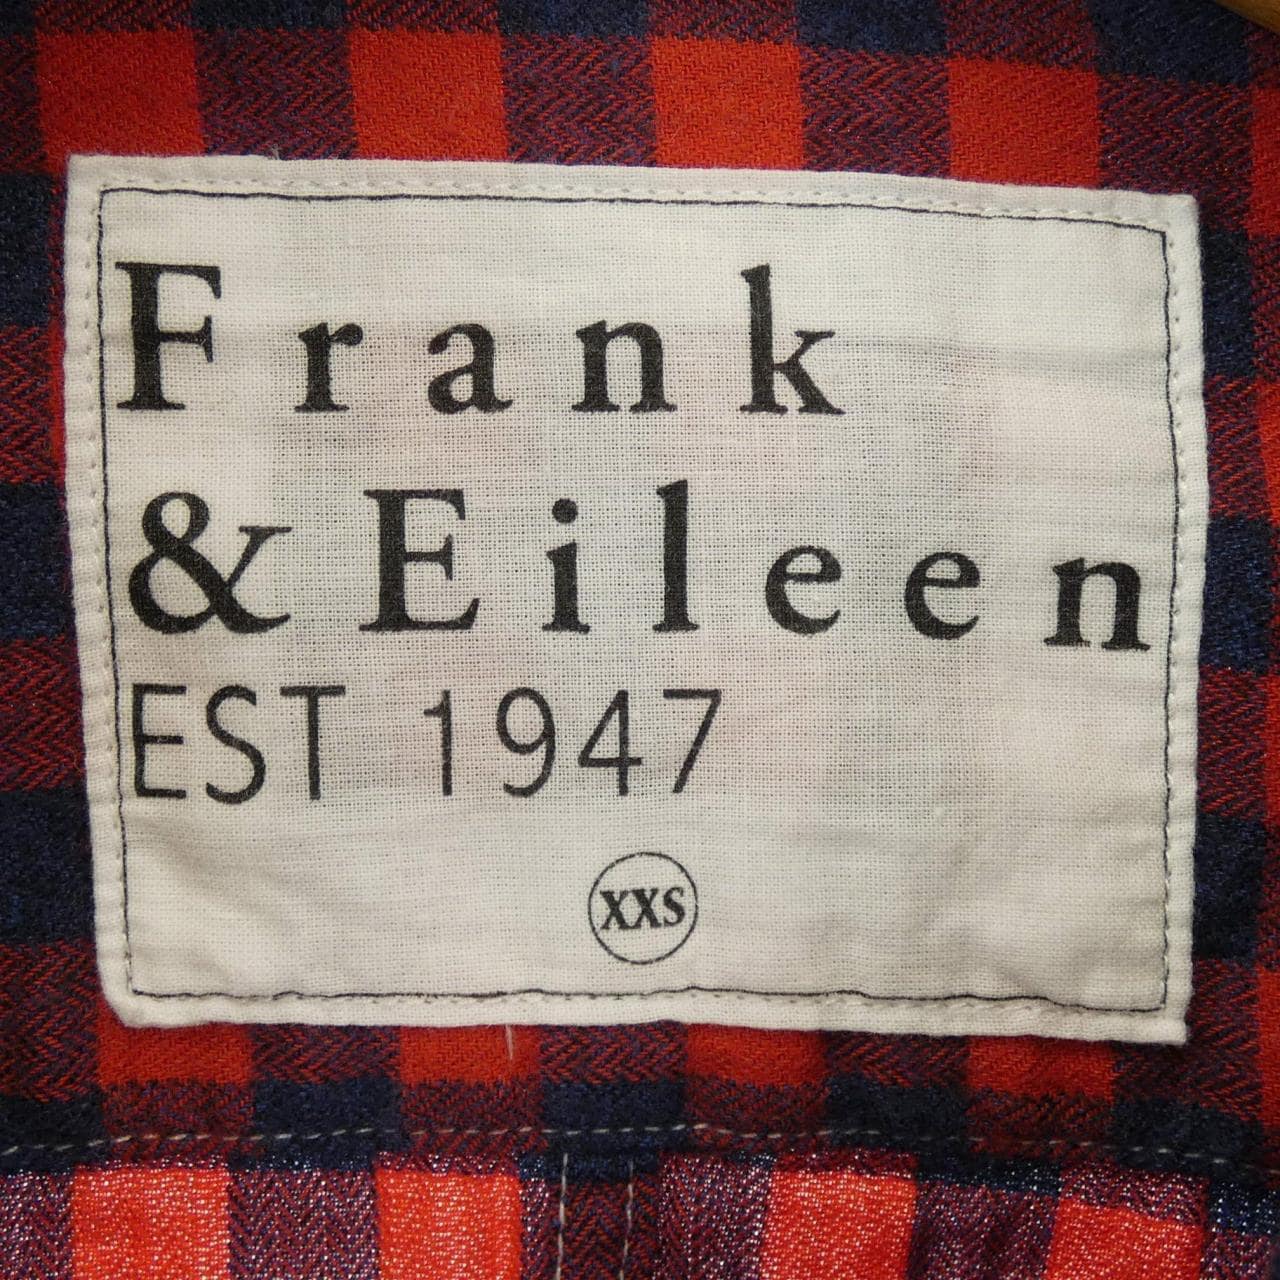 法兰克福&EILEEN FRANK&EILEEN衬衫